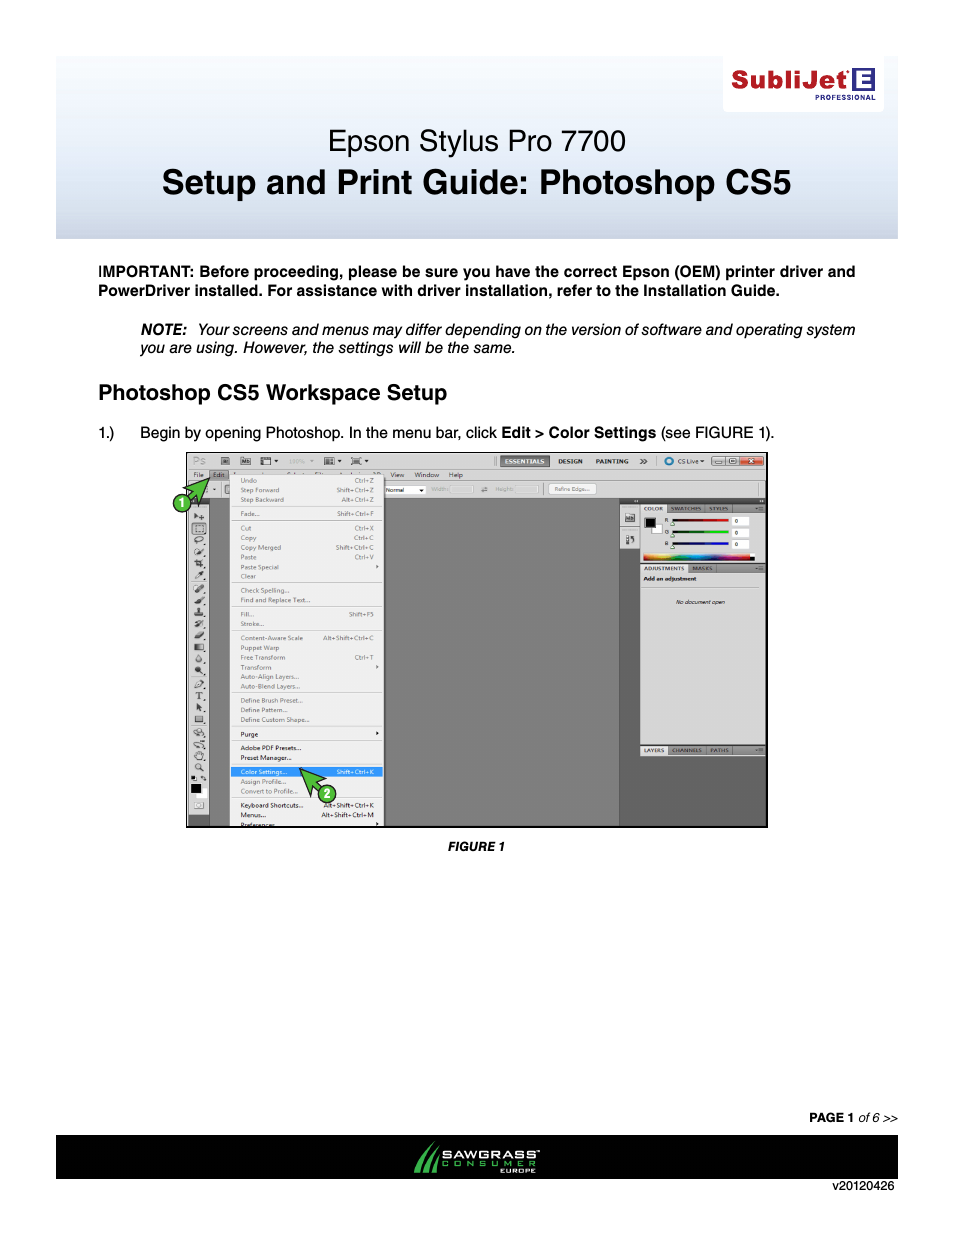 SubliJet E Epson Stylus Pro 7700 (Windows Power Driver Setup): Print & Setup Guide Photoshop CS5